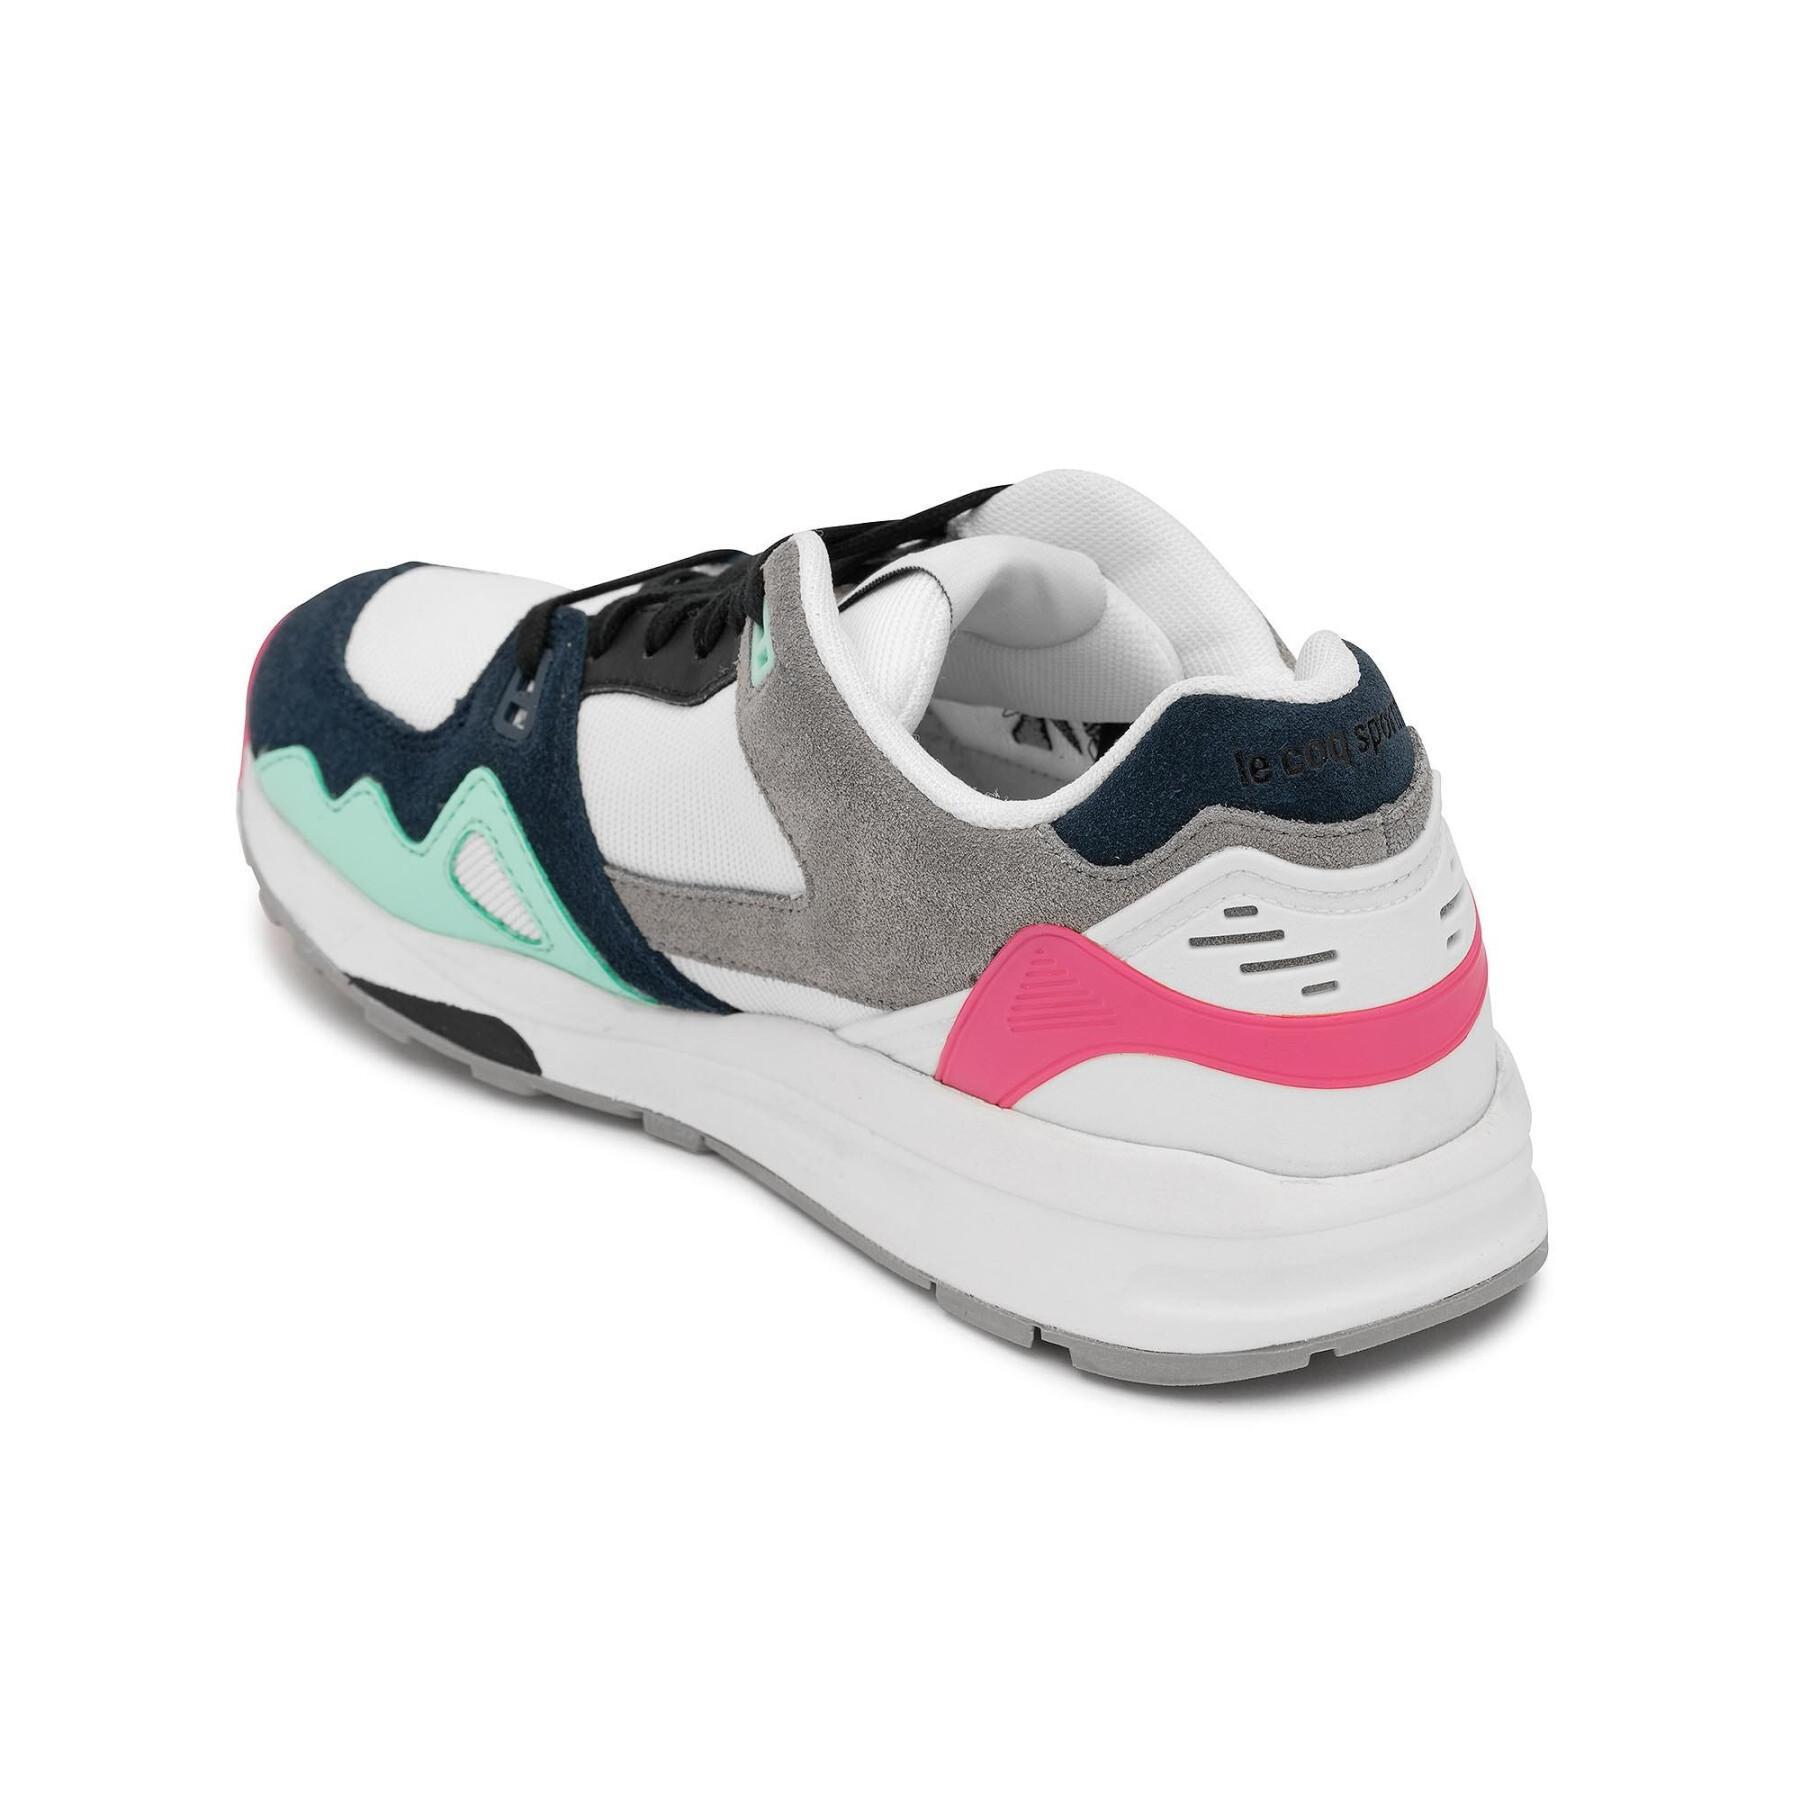 Sneakers für Frauen Le Coq Sportif R1000 Color